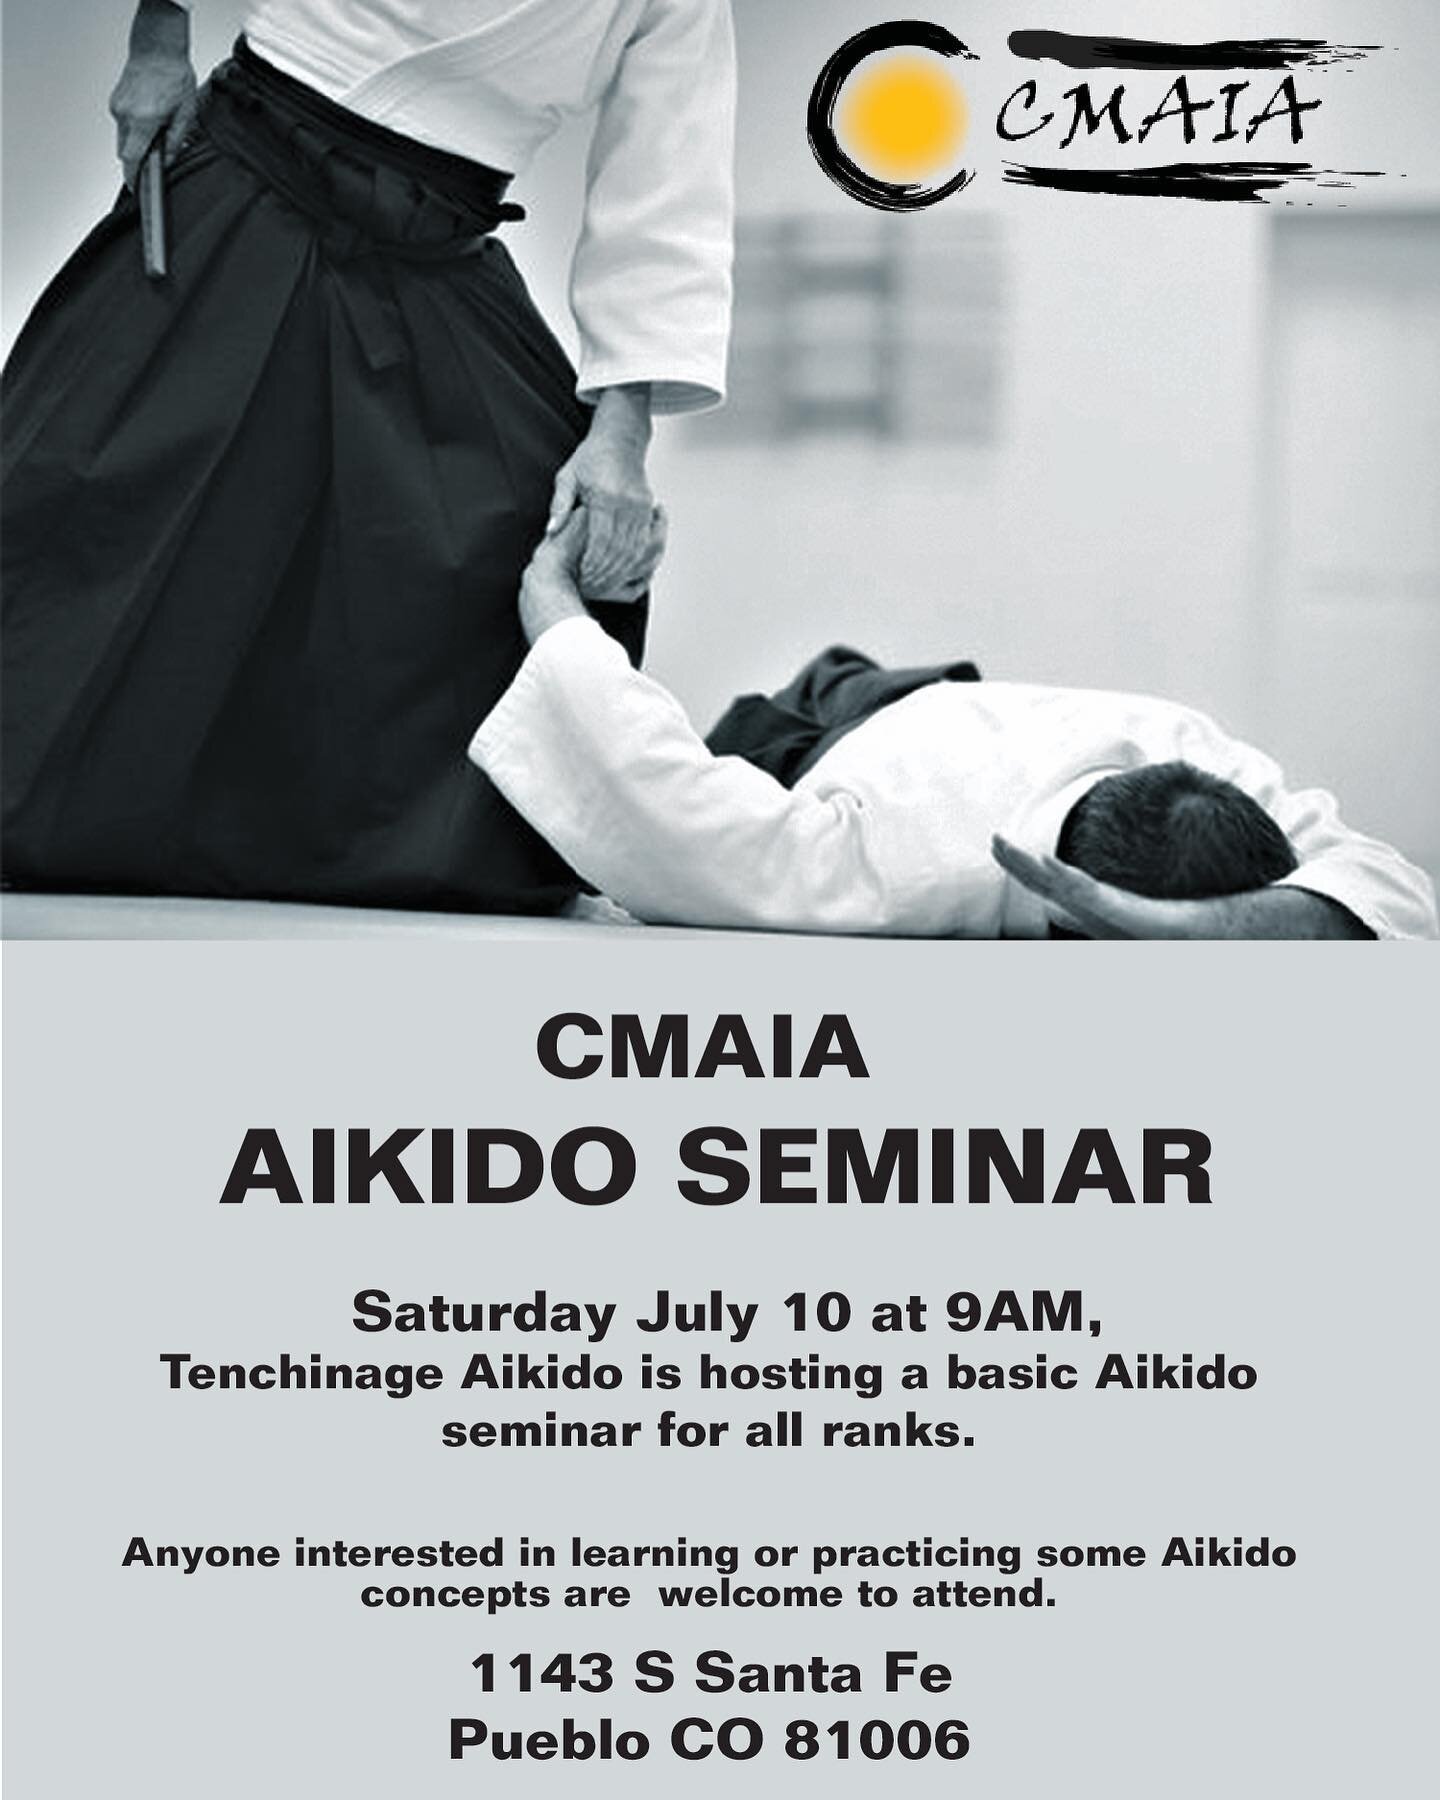 All ranks welcome. Next Saturday at 9AM come practice some new techniques with Tenchinage Aikido

#pueblocolorado #coloradomartialartsinstructorsalliance #puebloshares #pueblomartialarts